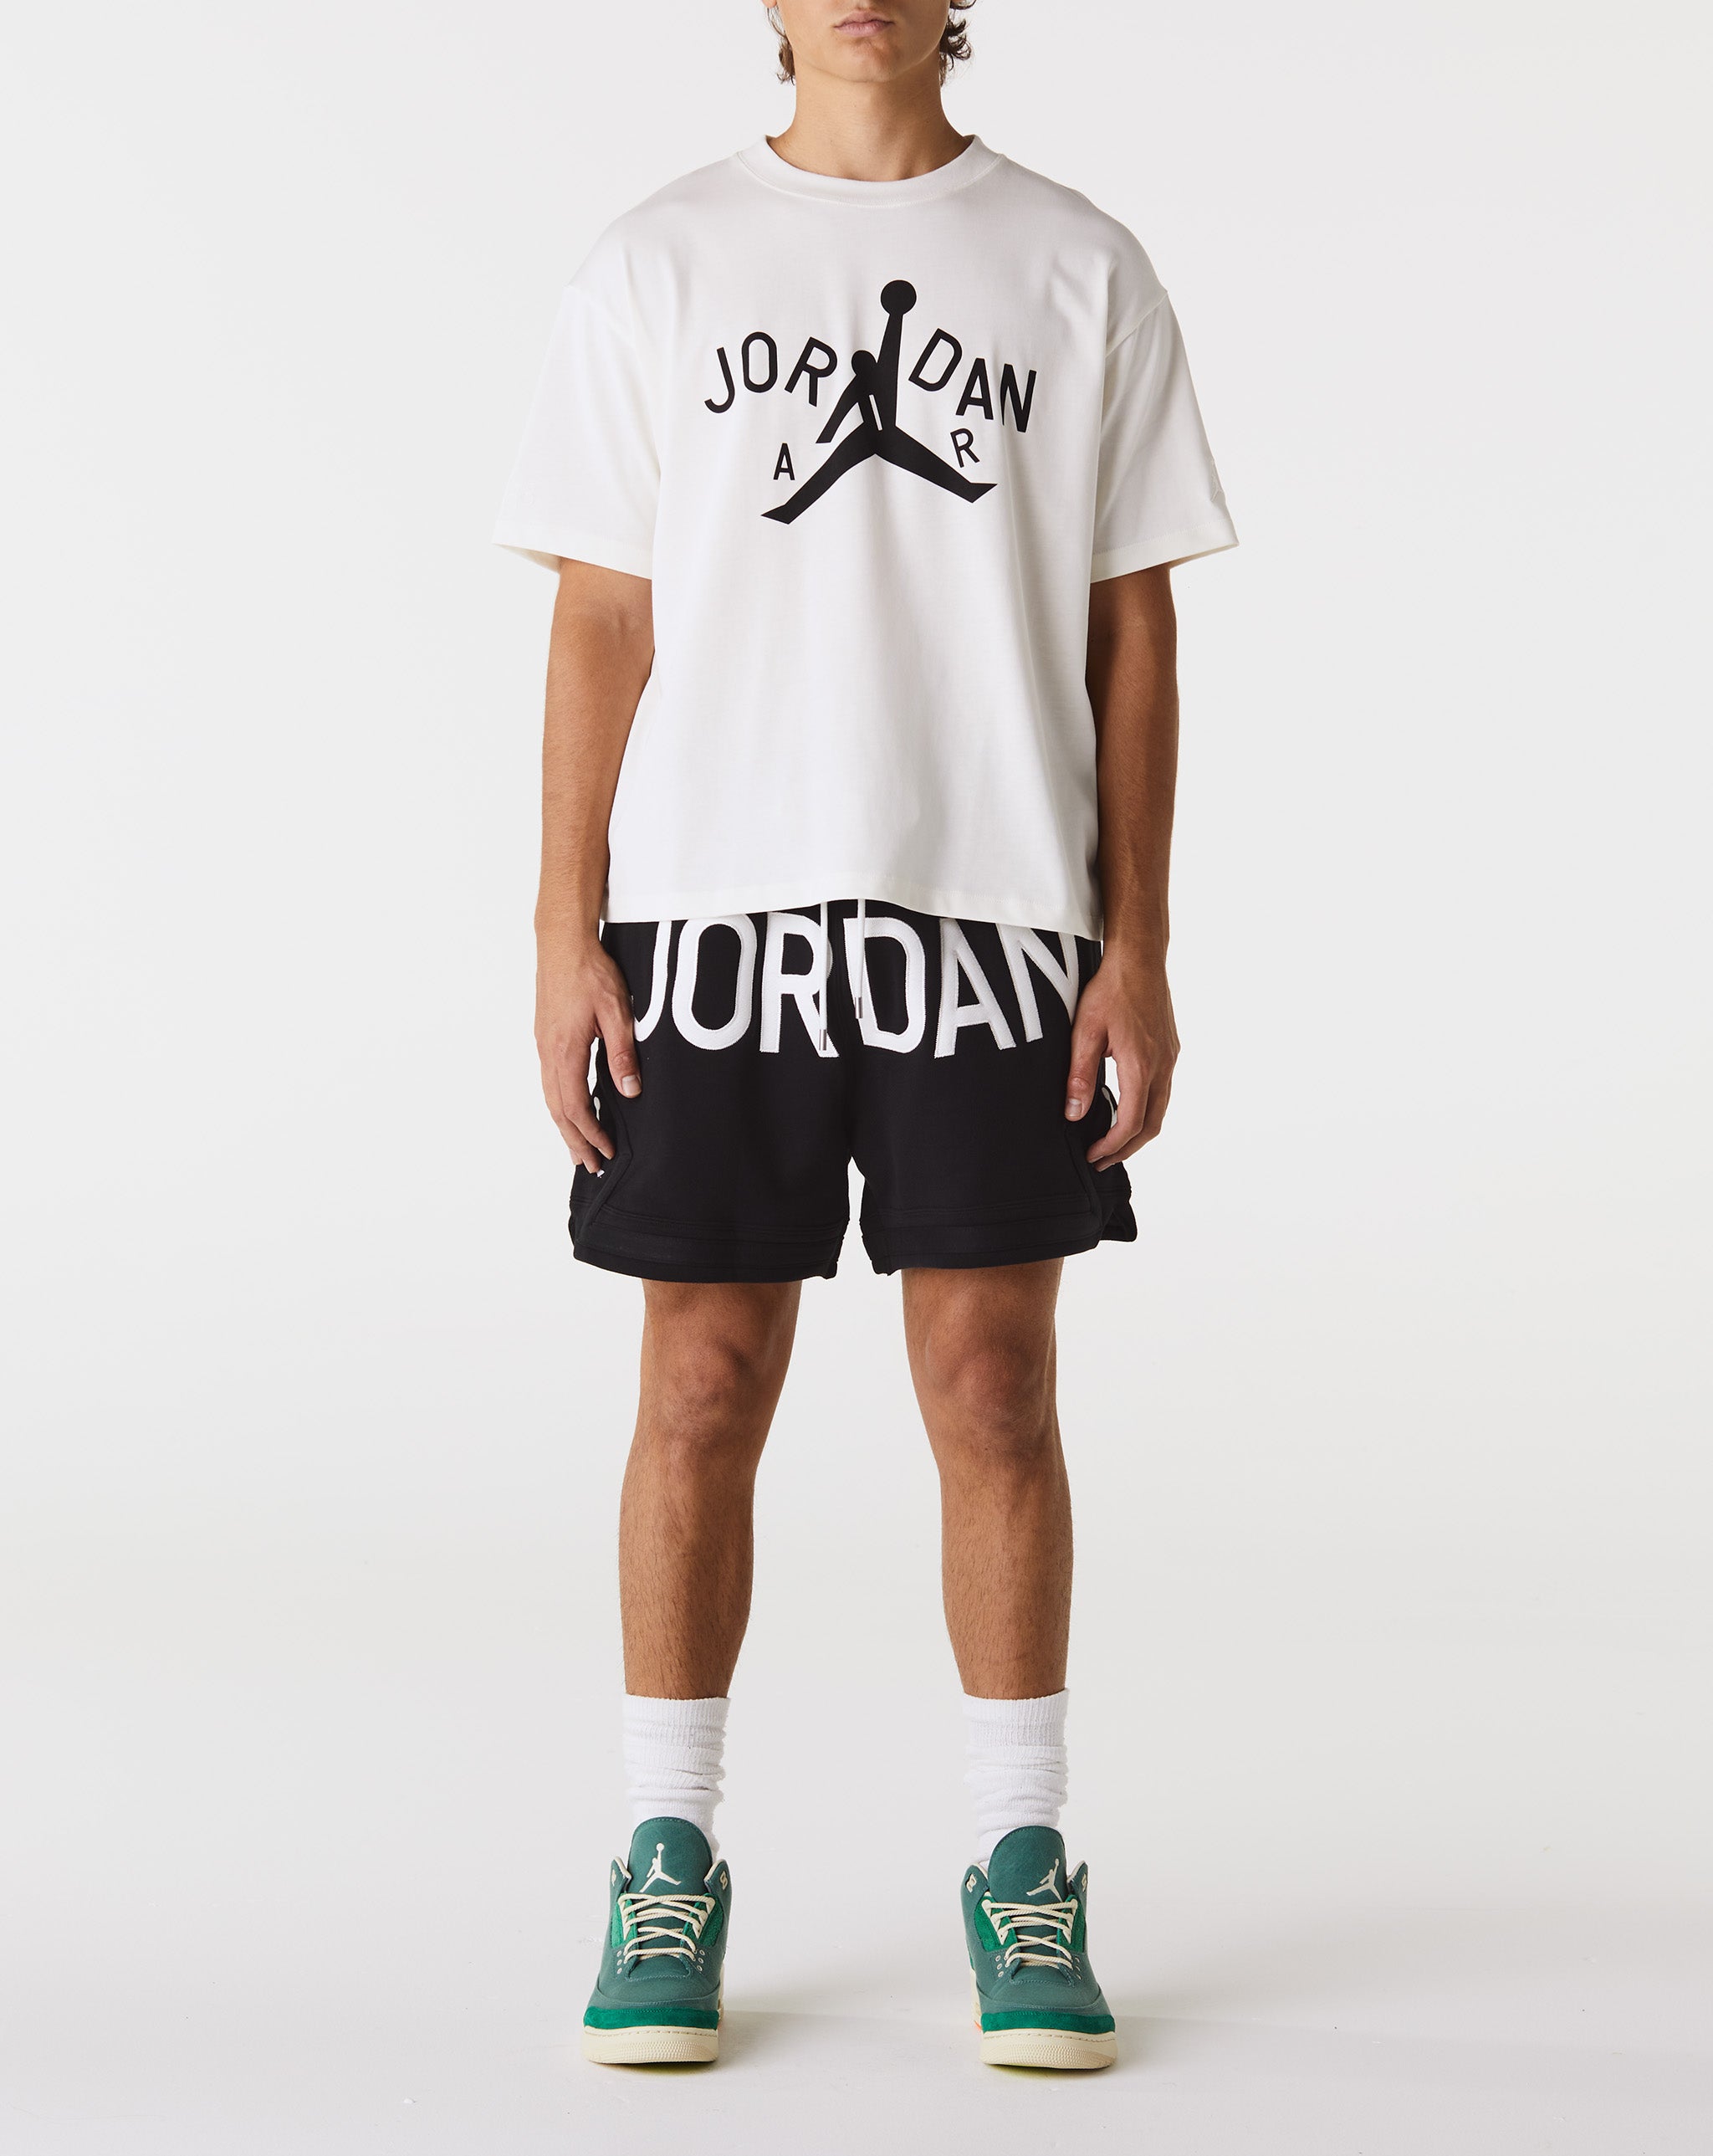 Air Jordan Nina Chanel Abney x Shorts  - Cheap Cerbe Jordan outlet